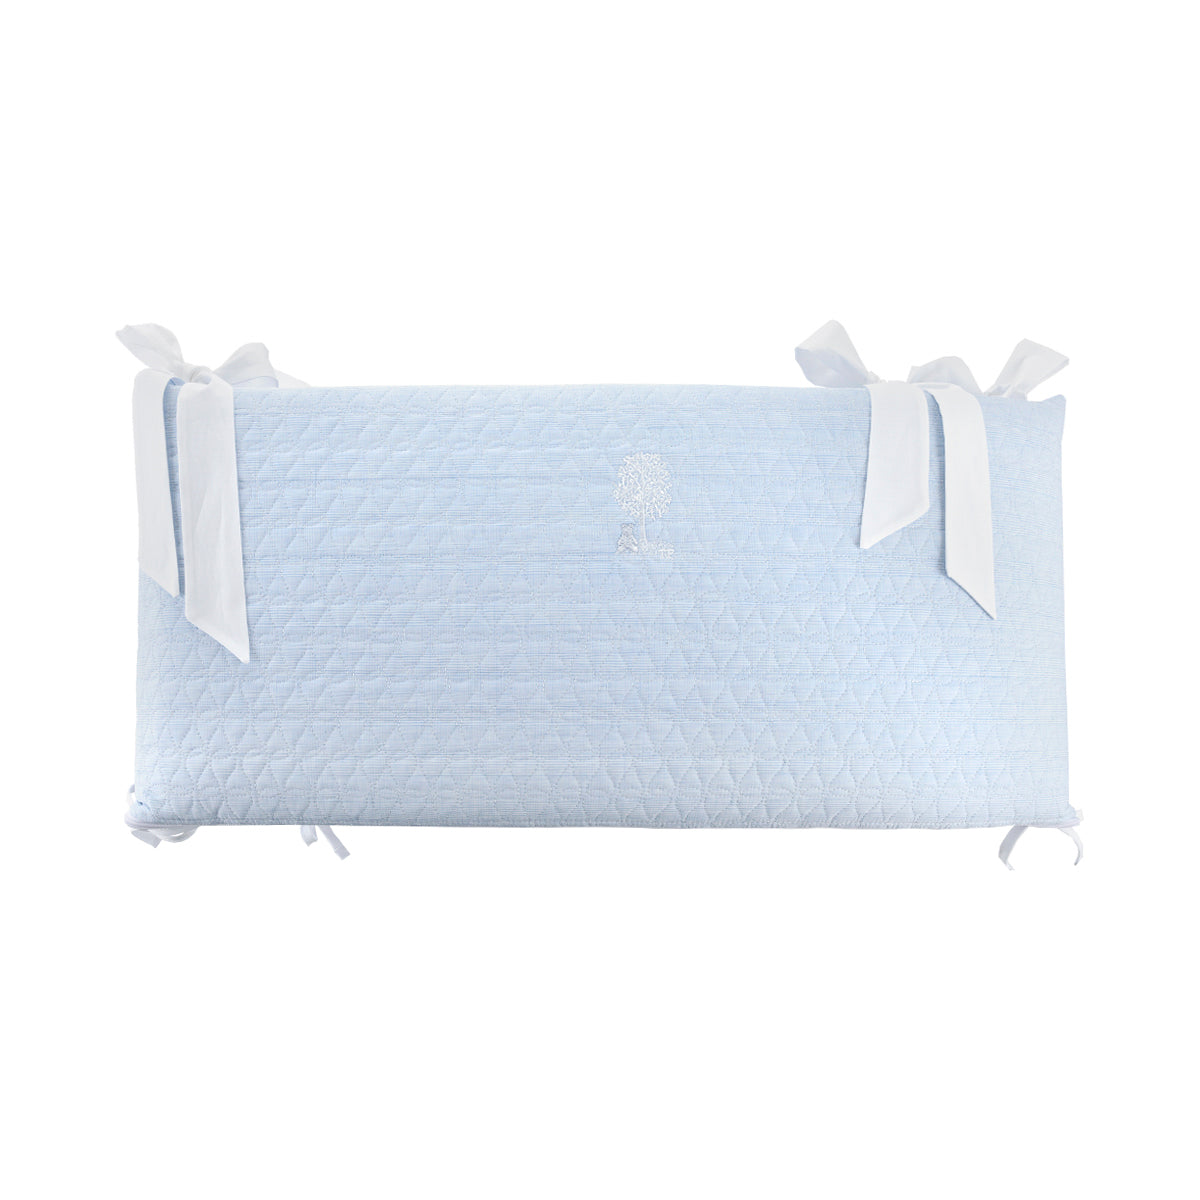 Theophile & Patachou Cot Bed Bumper 70 cm - Sweet Blue